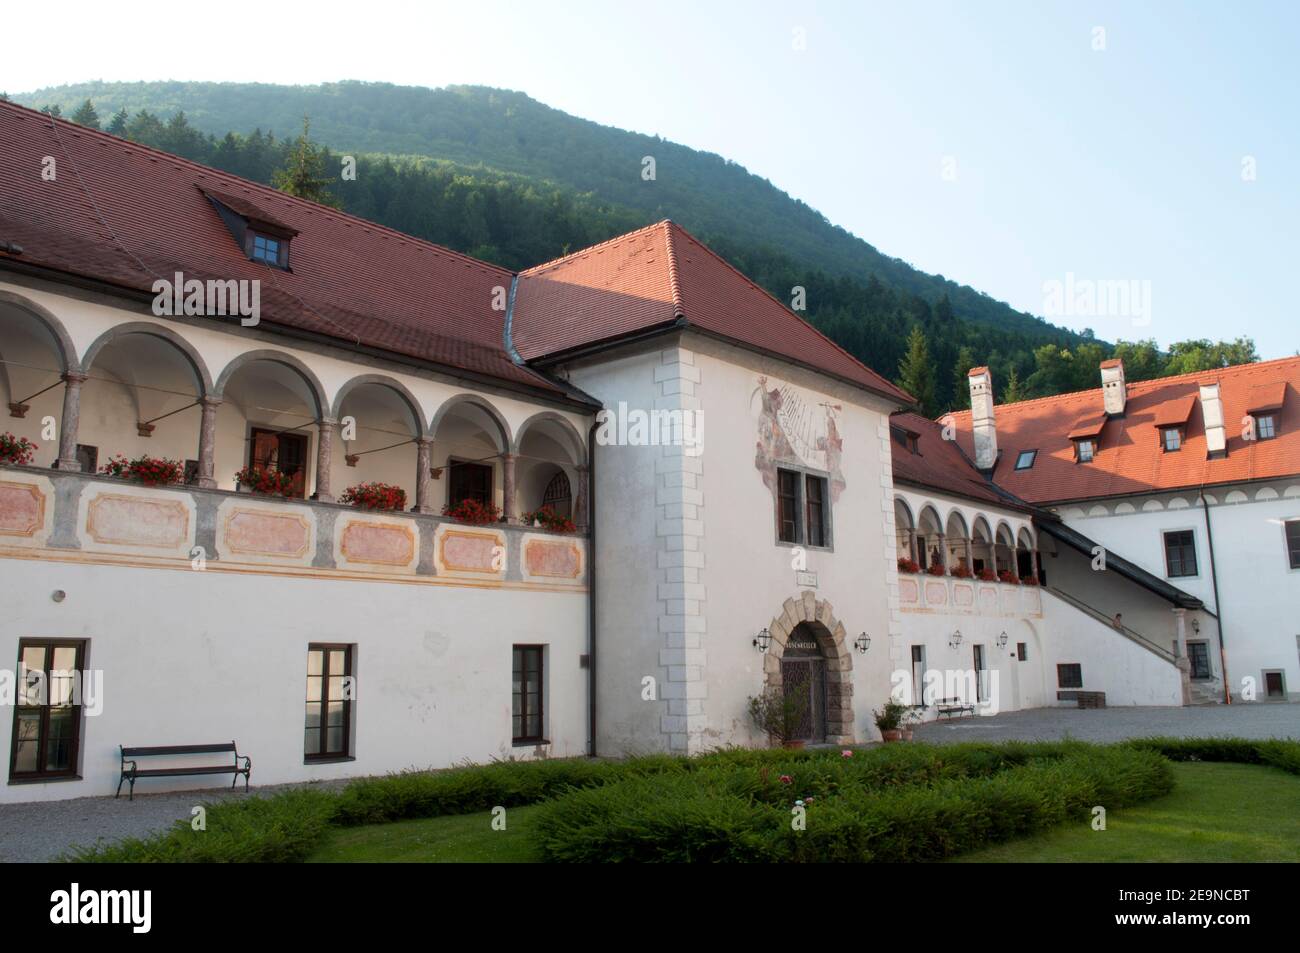 Kartause, 14th century Carthusian monastery in Gaming near Scheibbs, Lower Austria, Austria (June 2012) Stock Photo